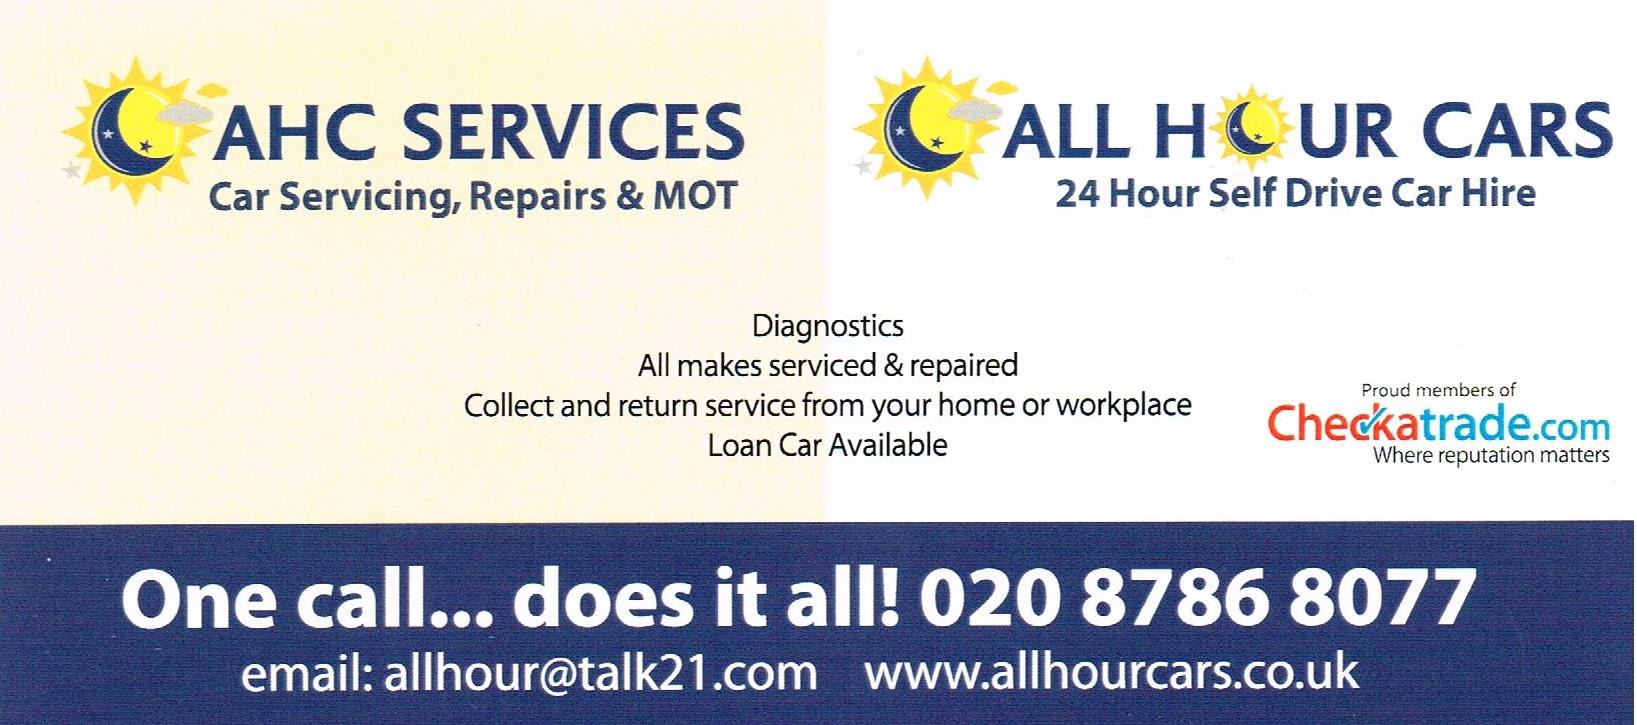 All Hour Cars A H C Services Epsom 020 8786 8077